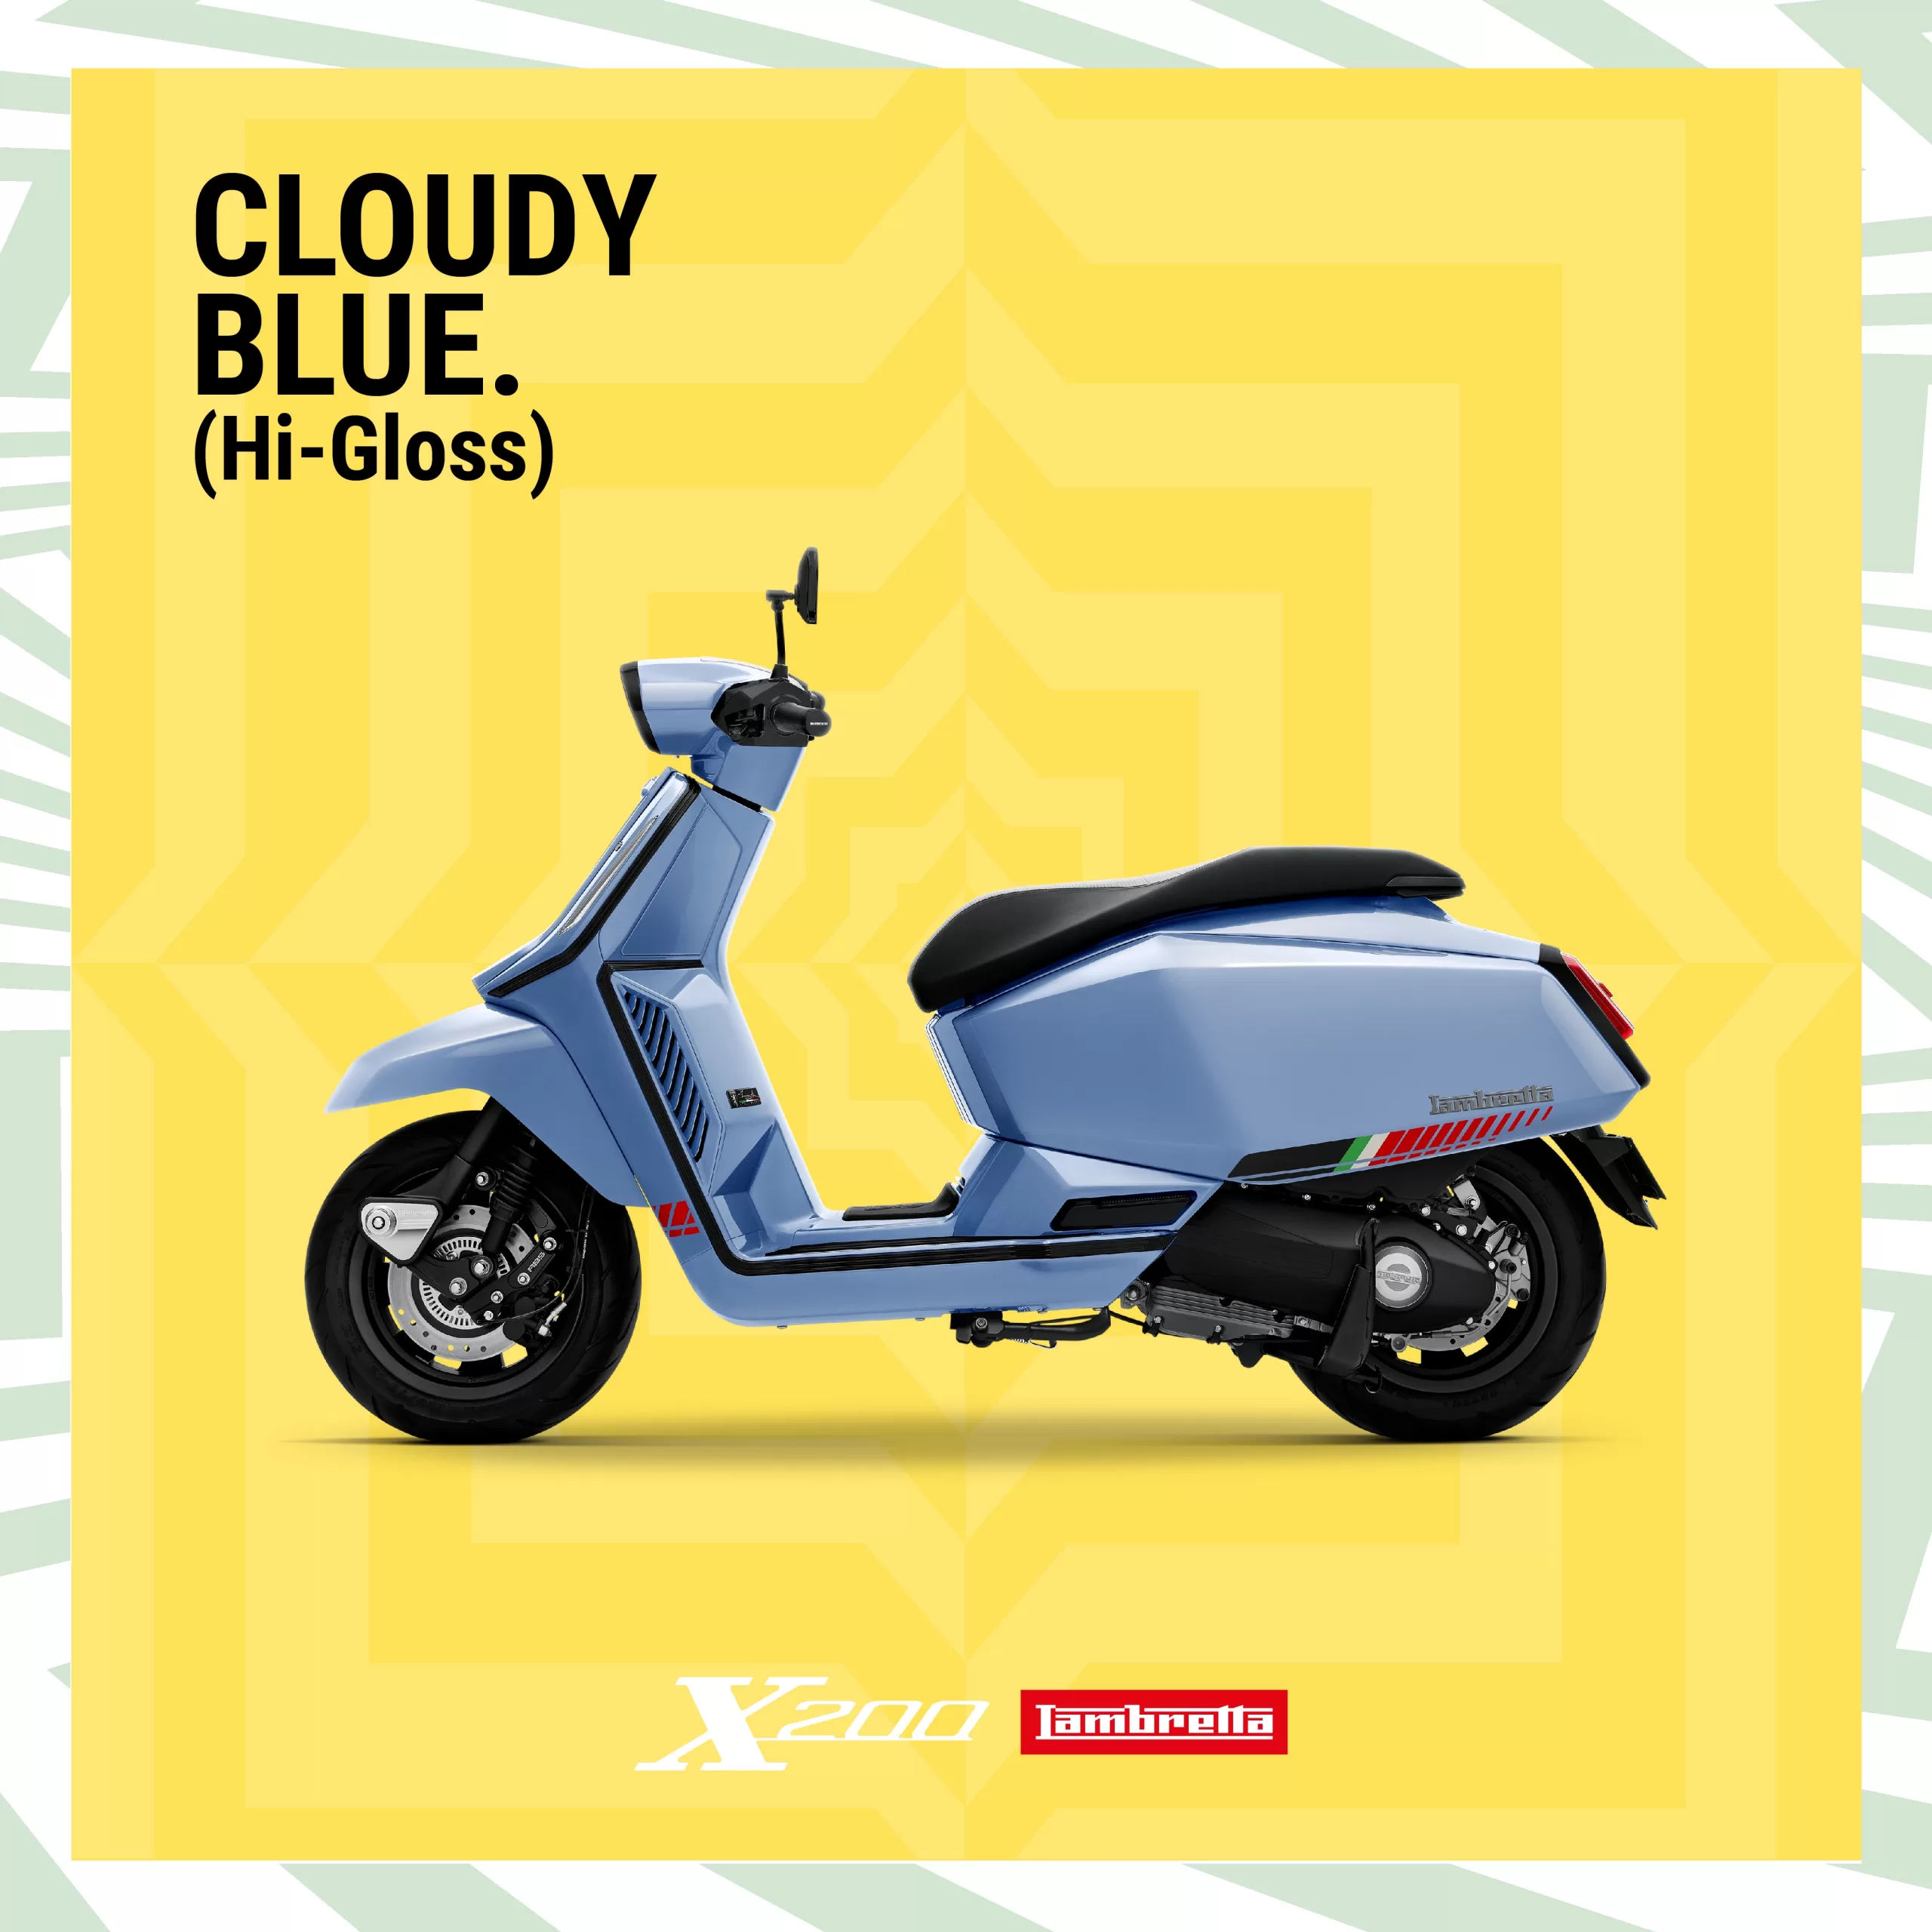 LAMBRETTA X200 CLOUDY BLUE (Hi-Gloss)